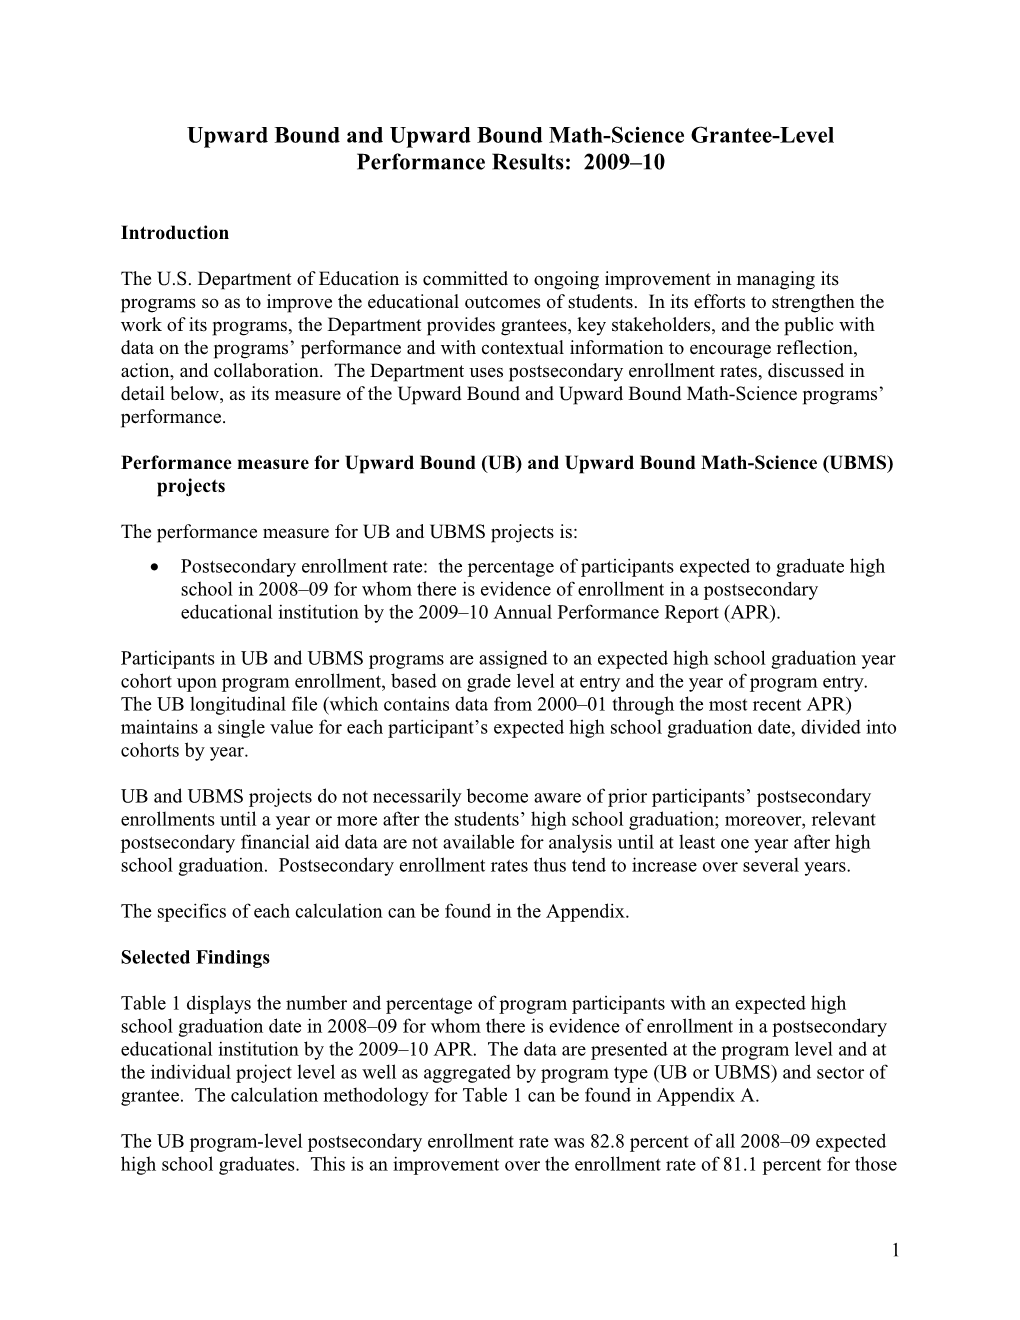 Grantee Level Data: Upward Bound and Upward Bound Math-Science Performance Results Explanation